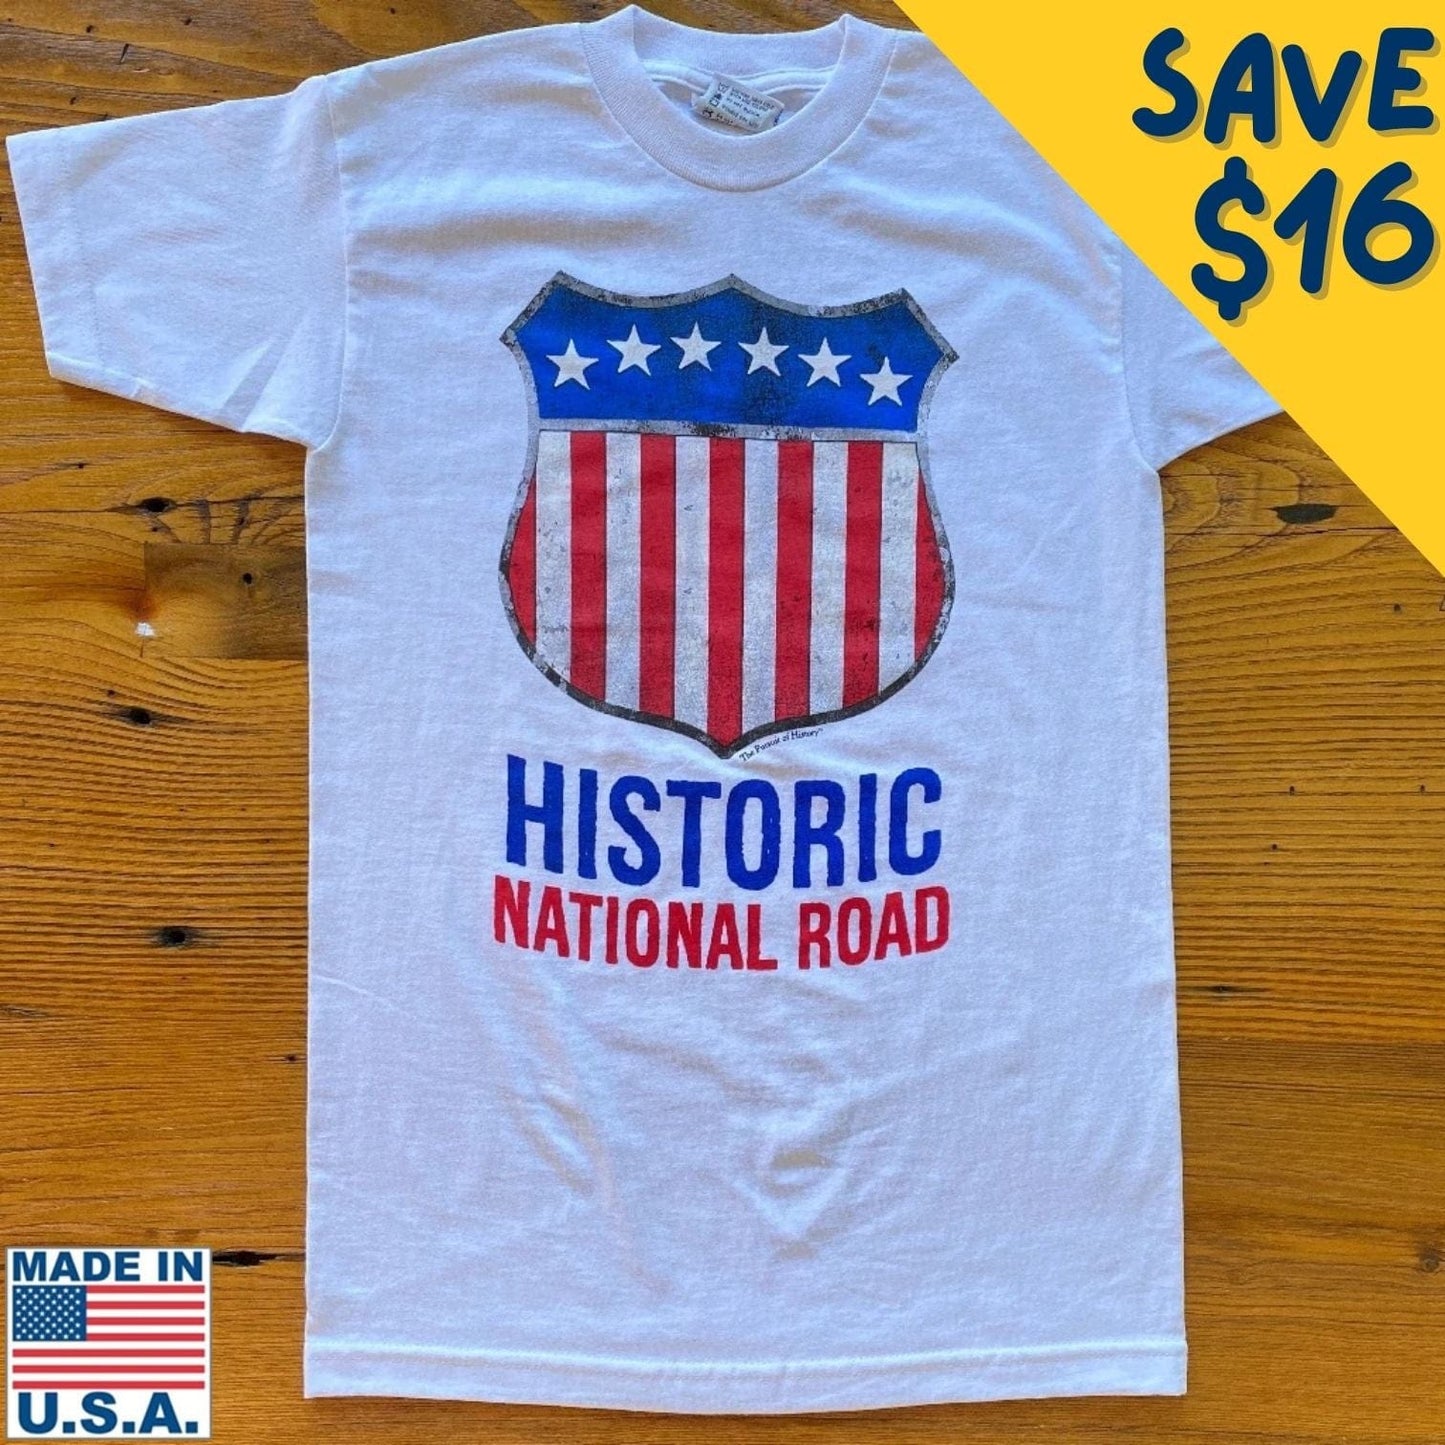 "Historic National Road" T-shirt